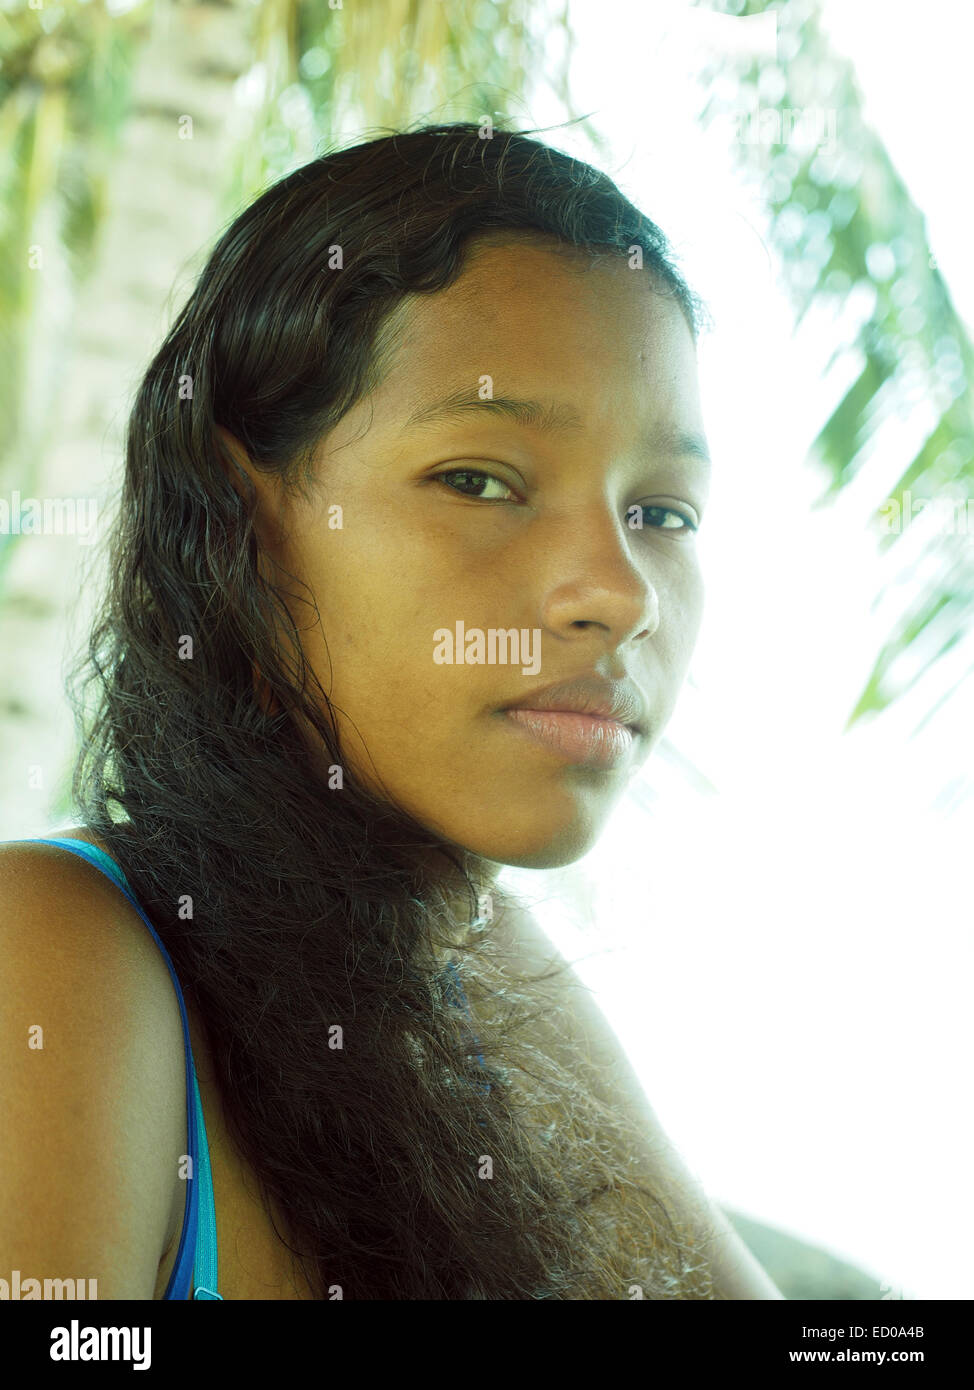 Young Nicaraguan Woman Fotos Und Bildmaterial In Hoher Auflösung Alamy